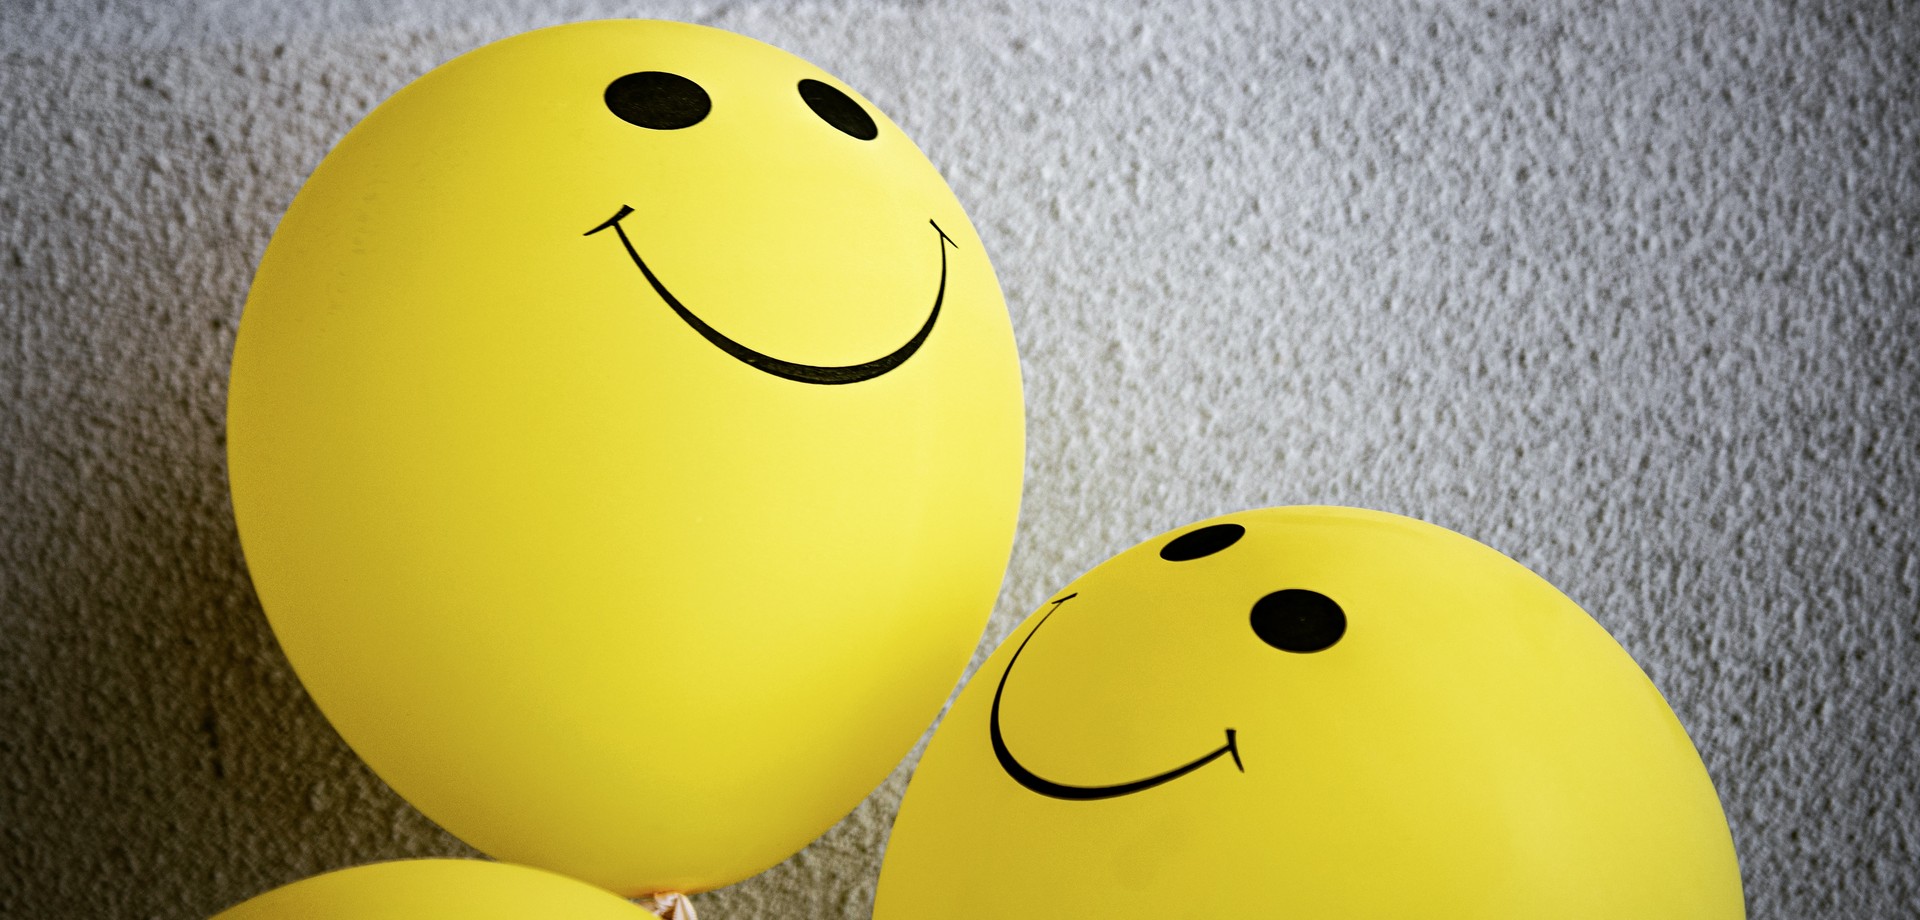 Luftballons mit Smileys